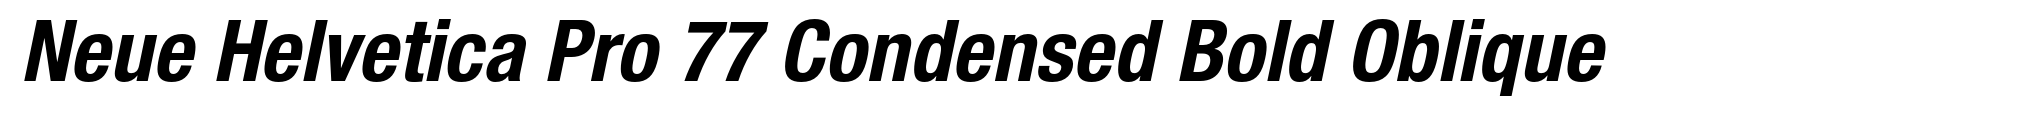 Neue Helvetica Pro 77 Condensed Bold Oblique image